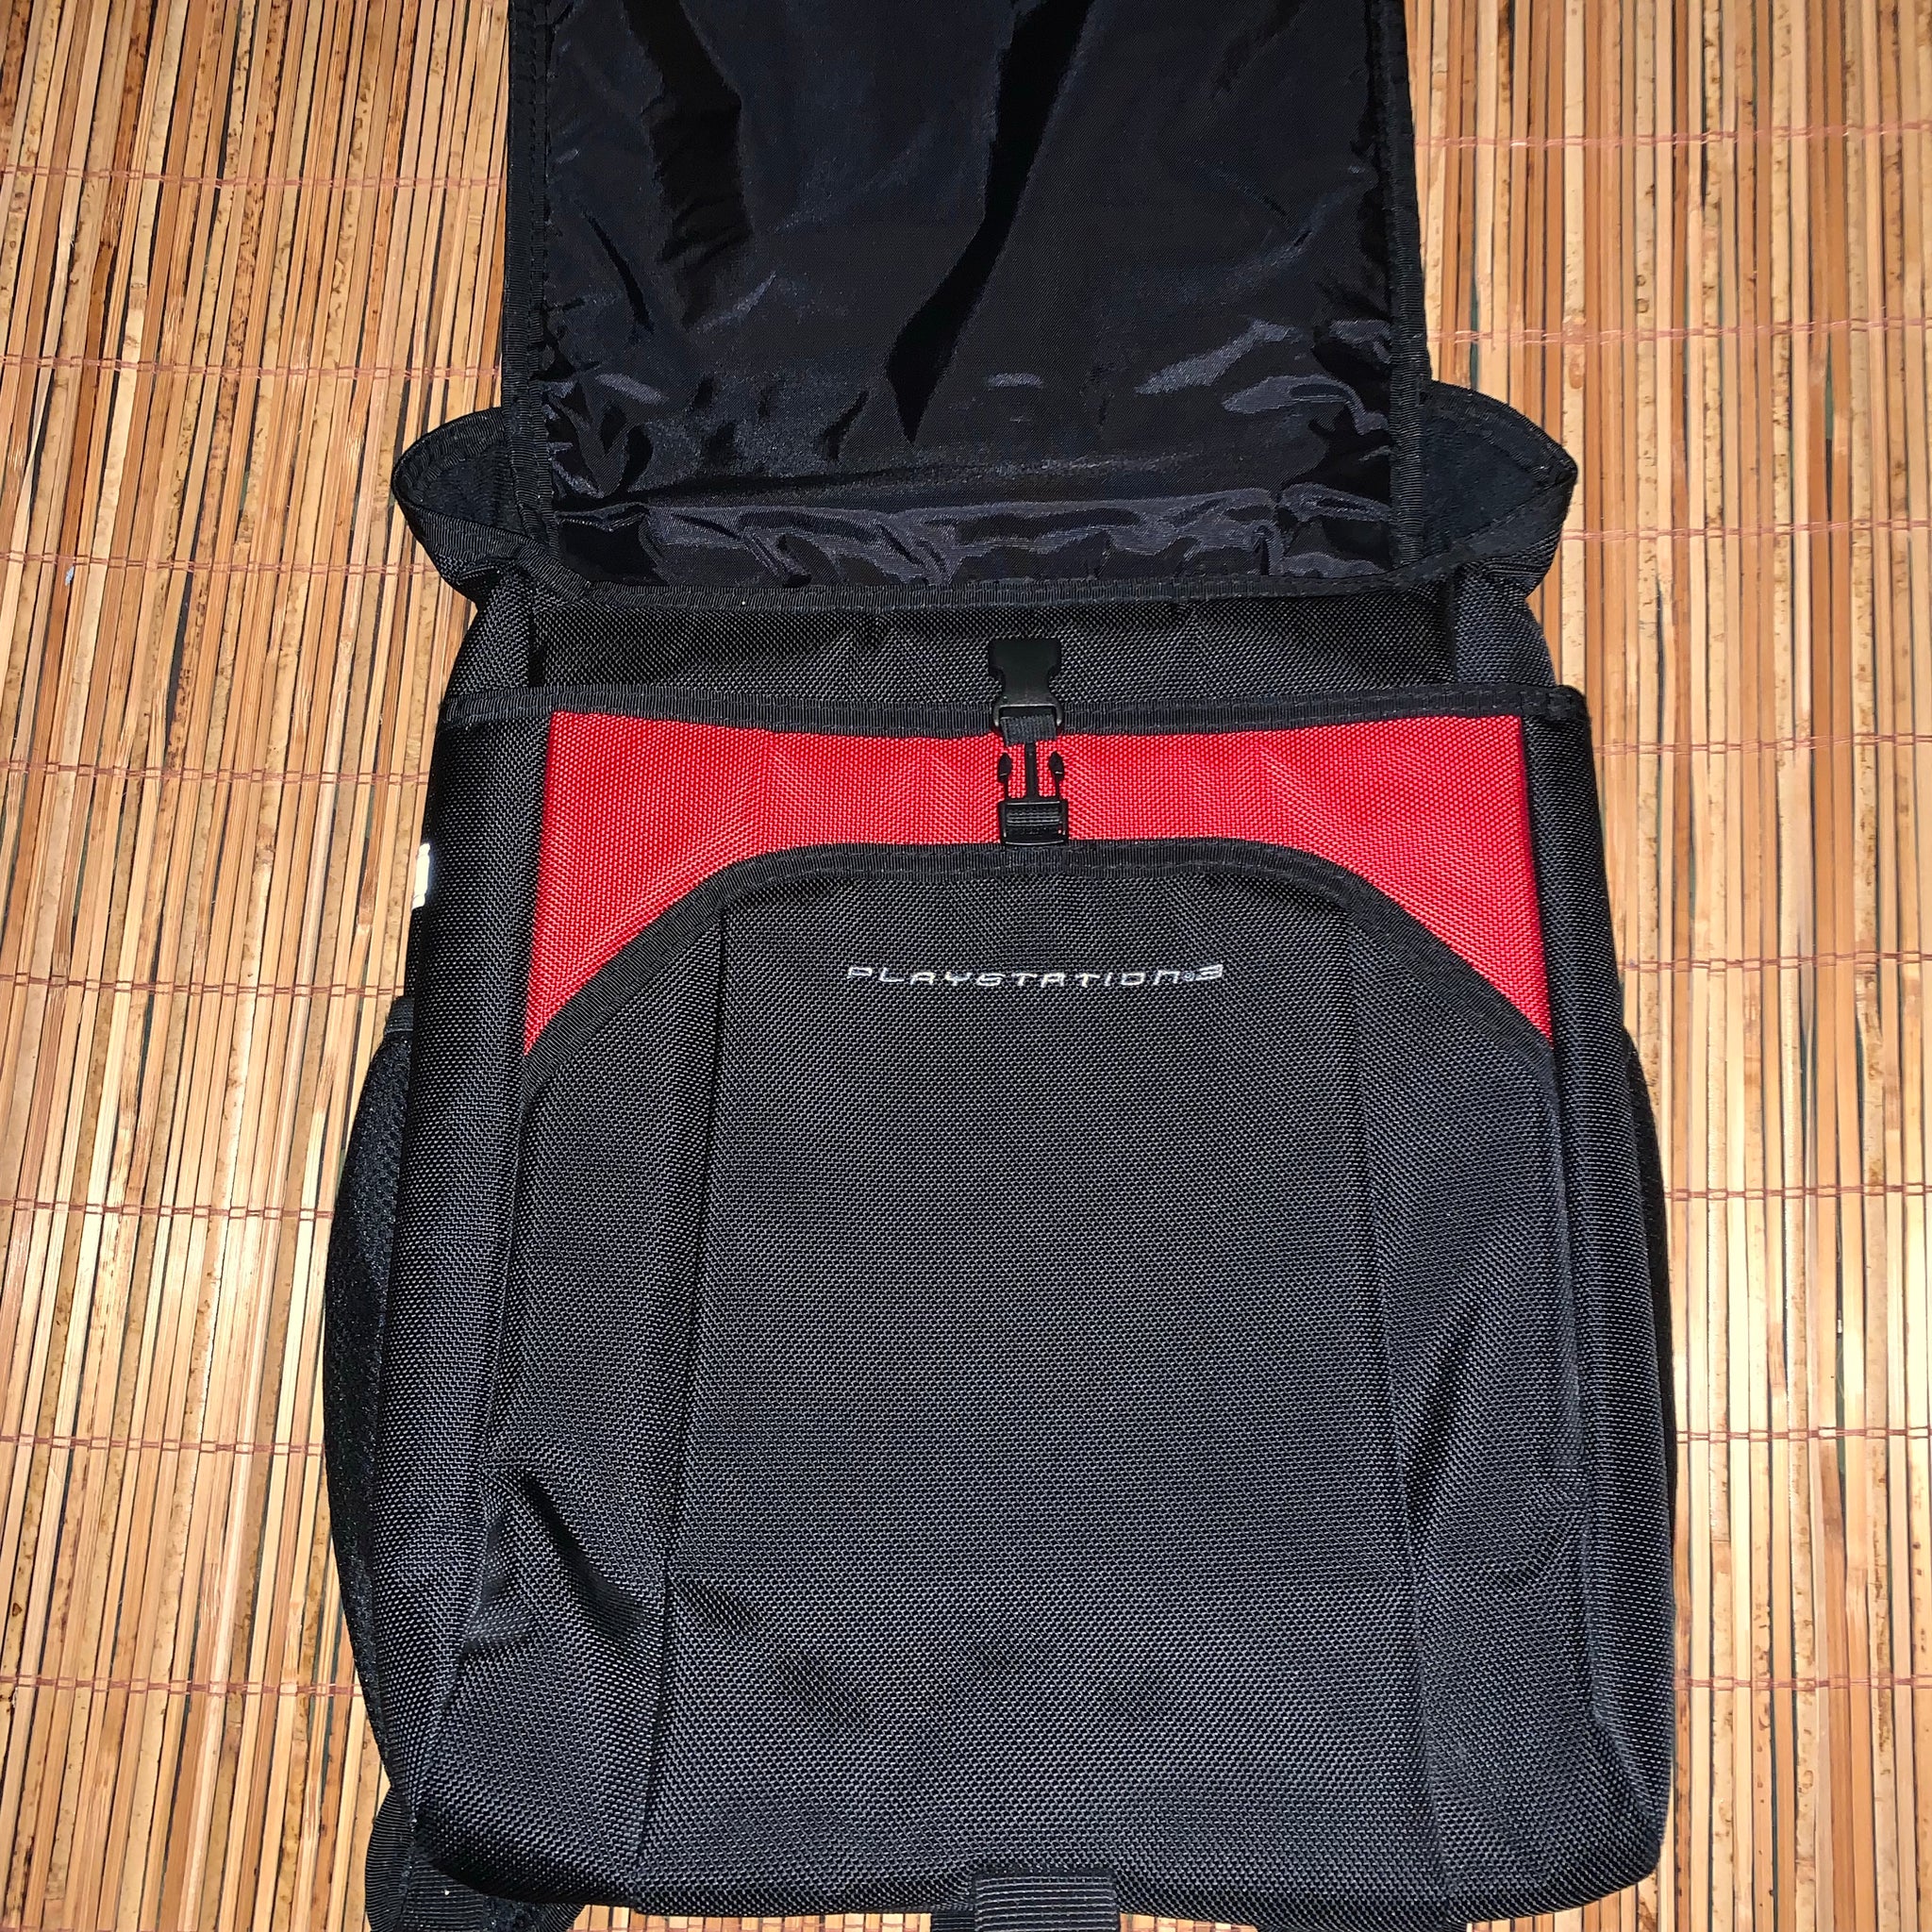 PlayStation Travel Bags | Mercari